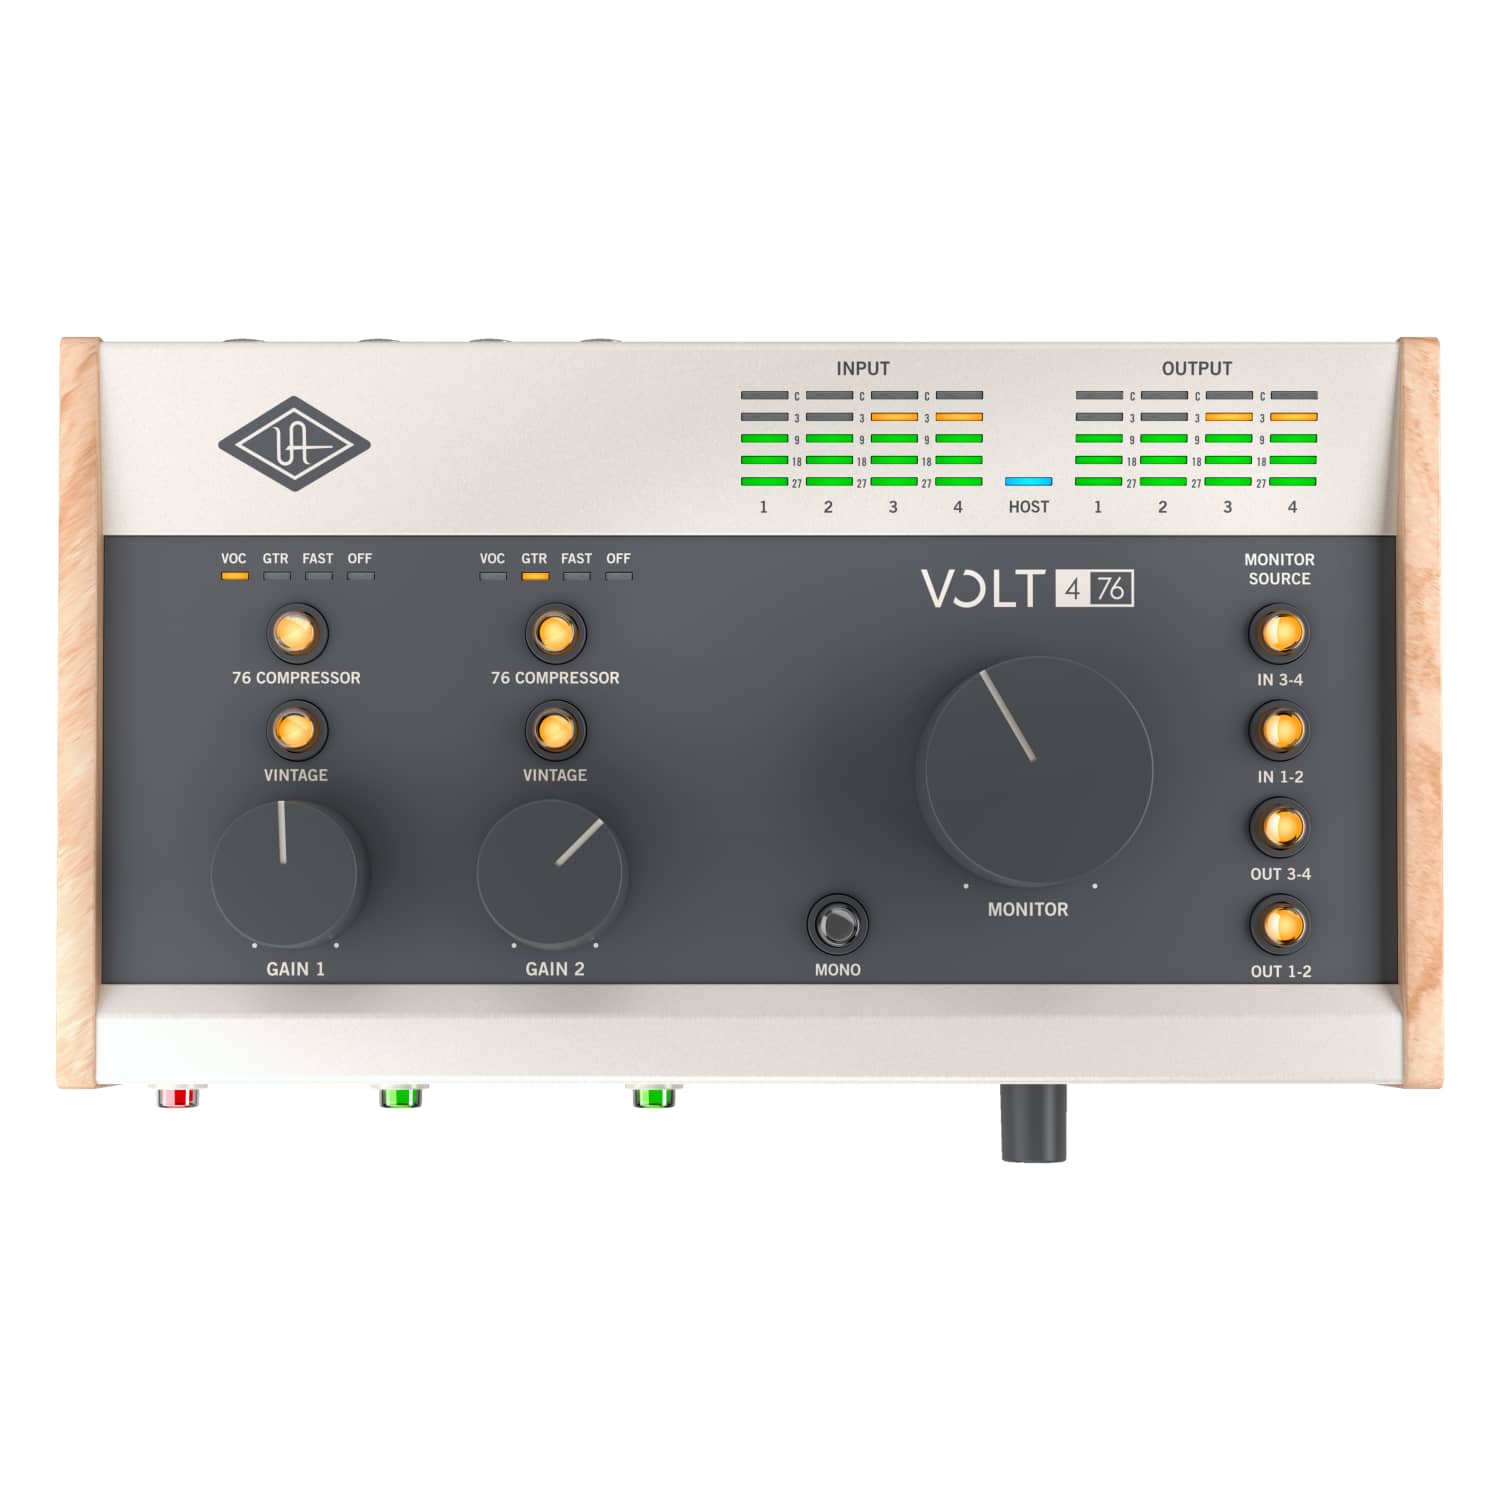 BJs Sound & Lighting - Volt 476 R2 F top transp bjs web